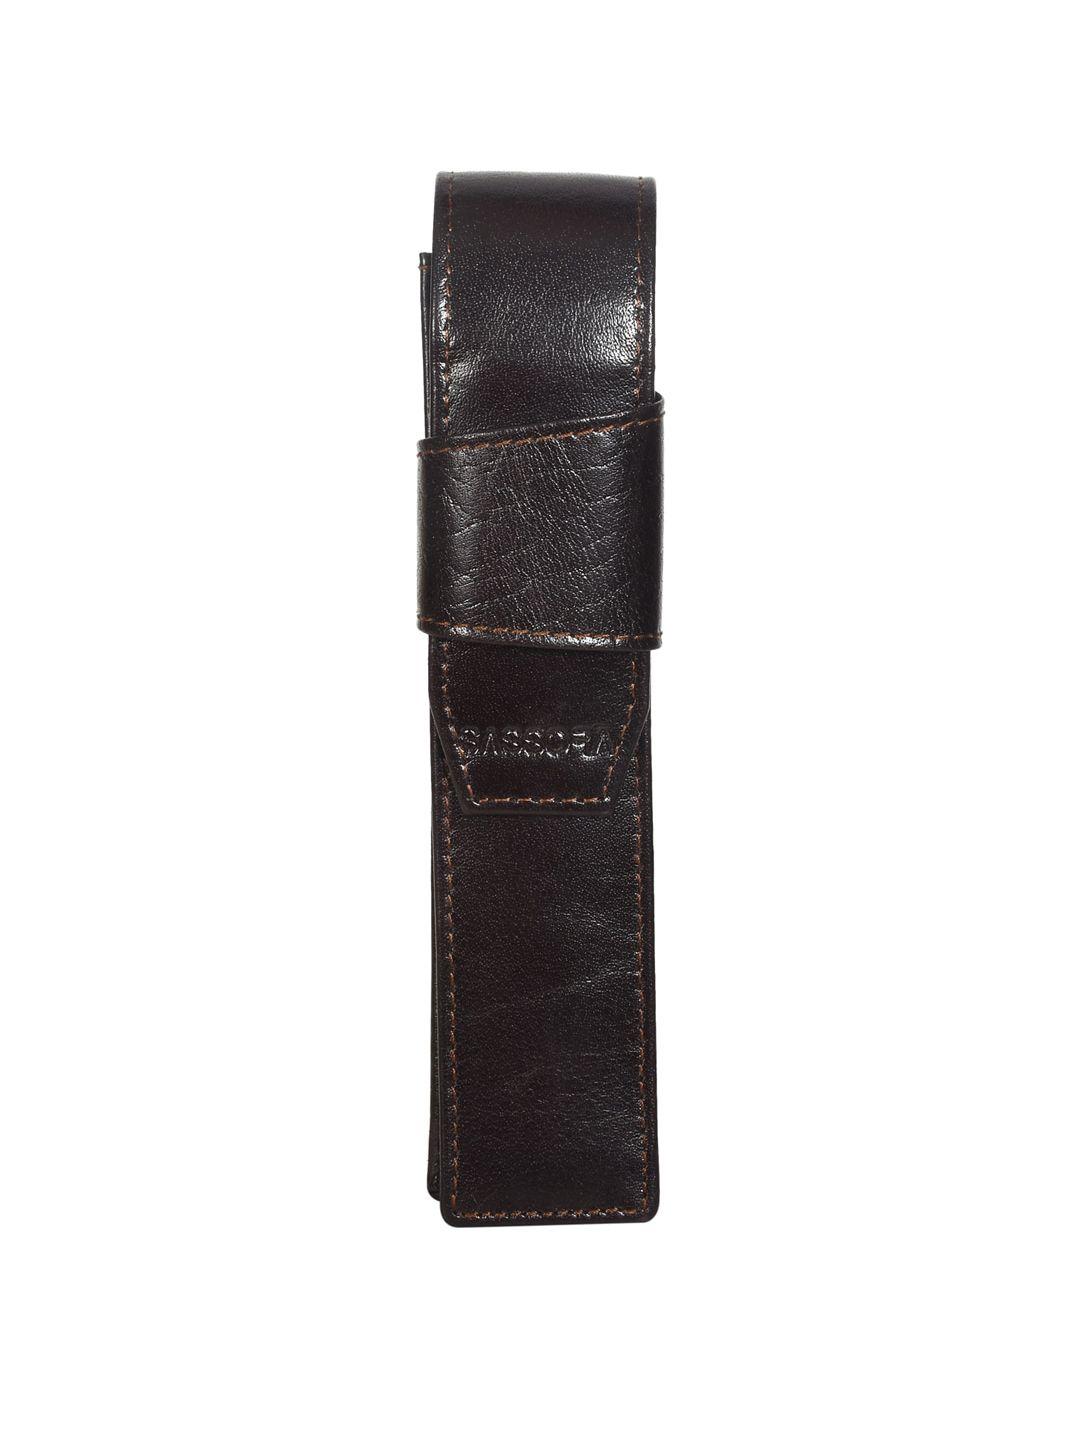 sassora leather pencase